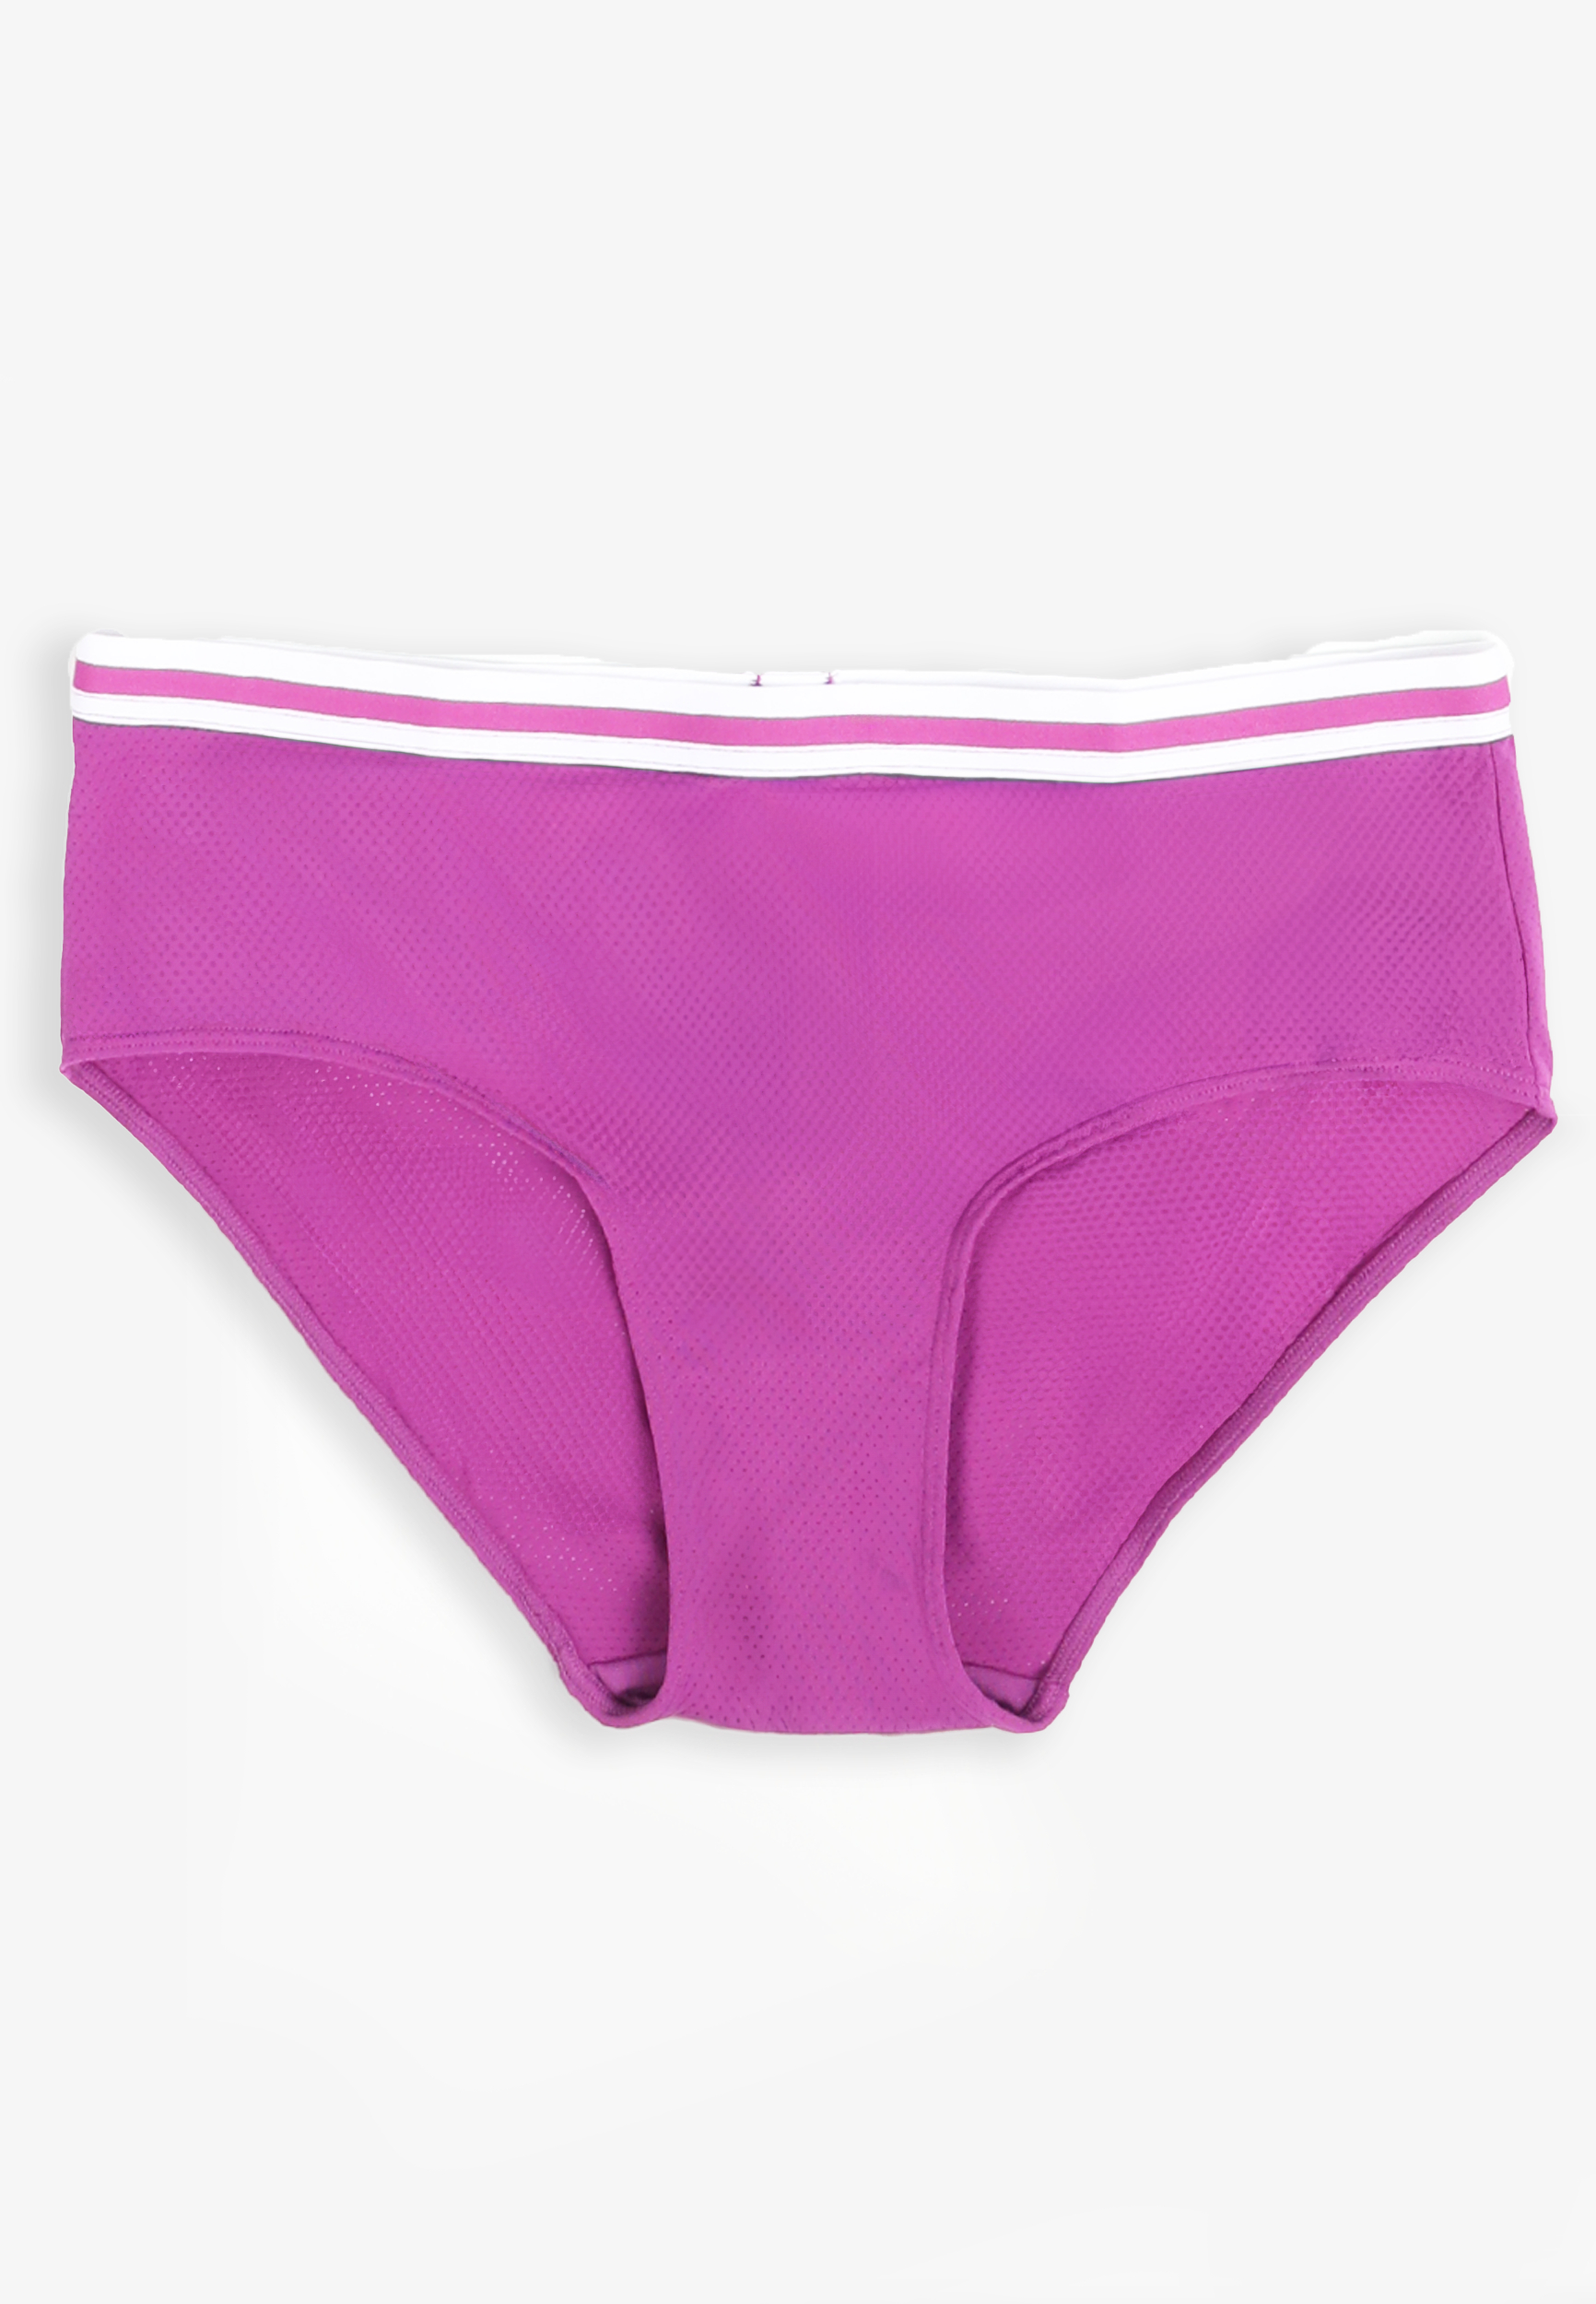 Women's Panties for sale in Mount Morris, Michigan, Facebook Marketplace